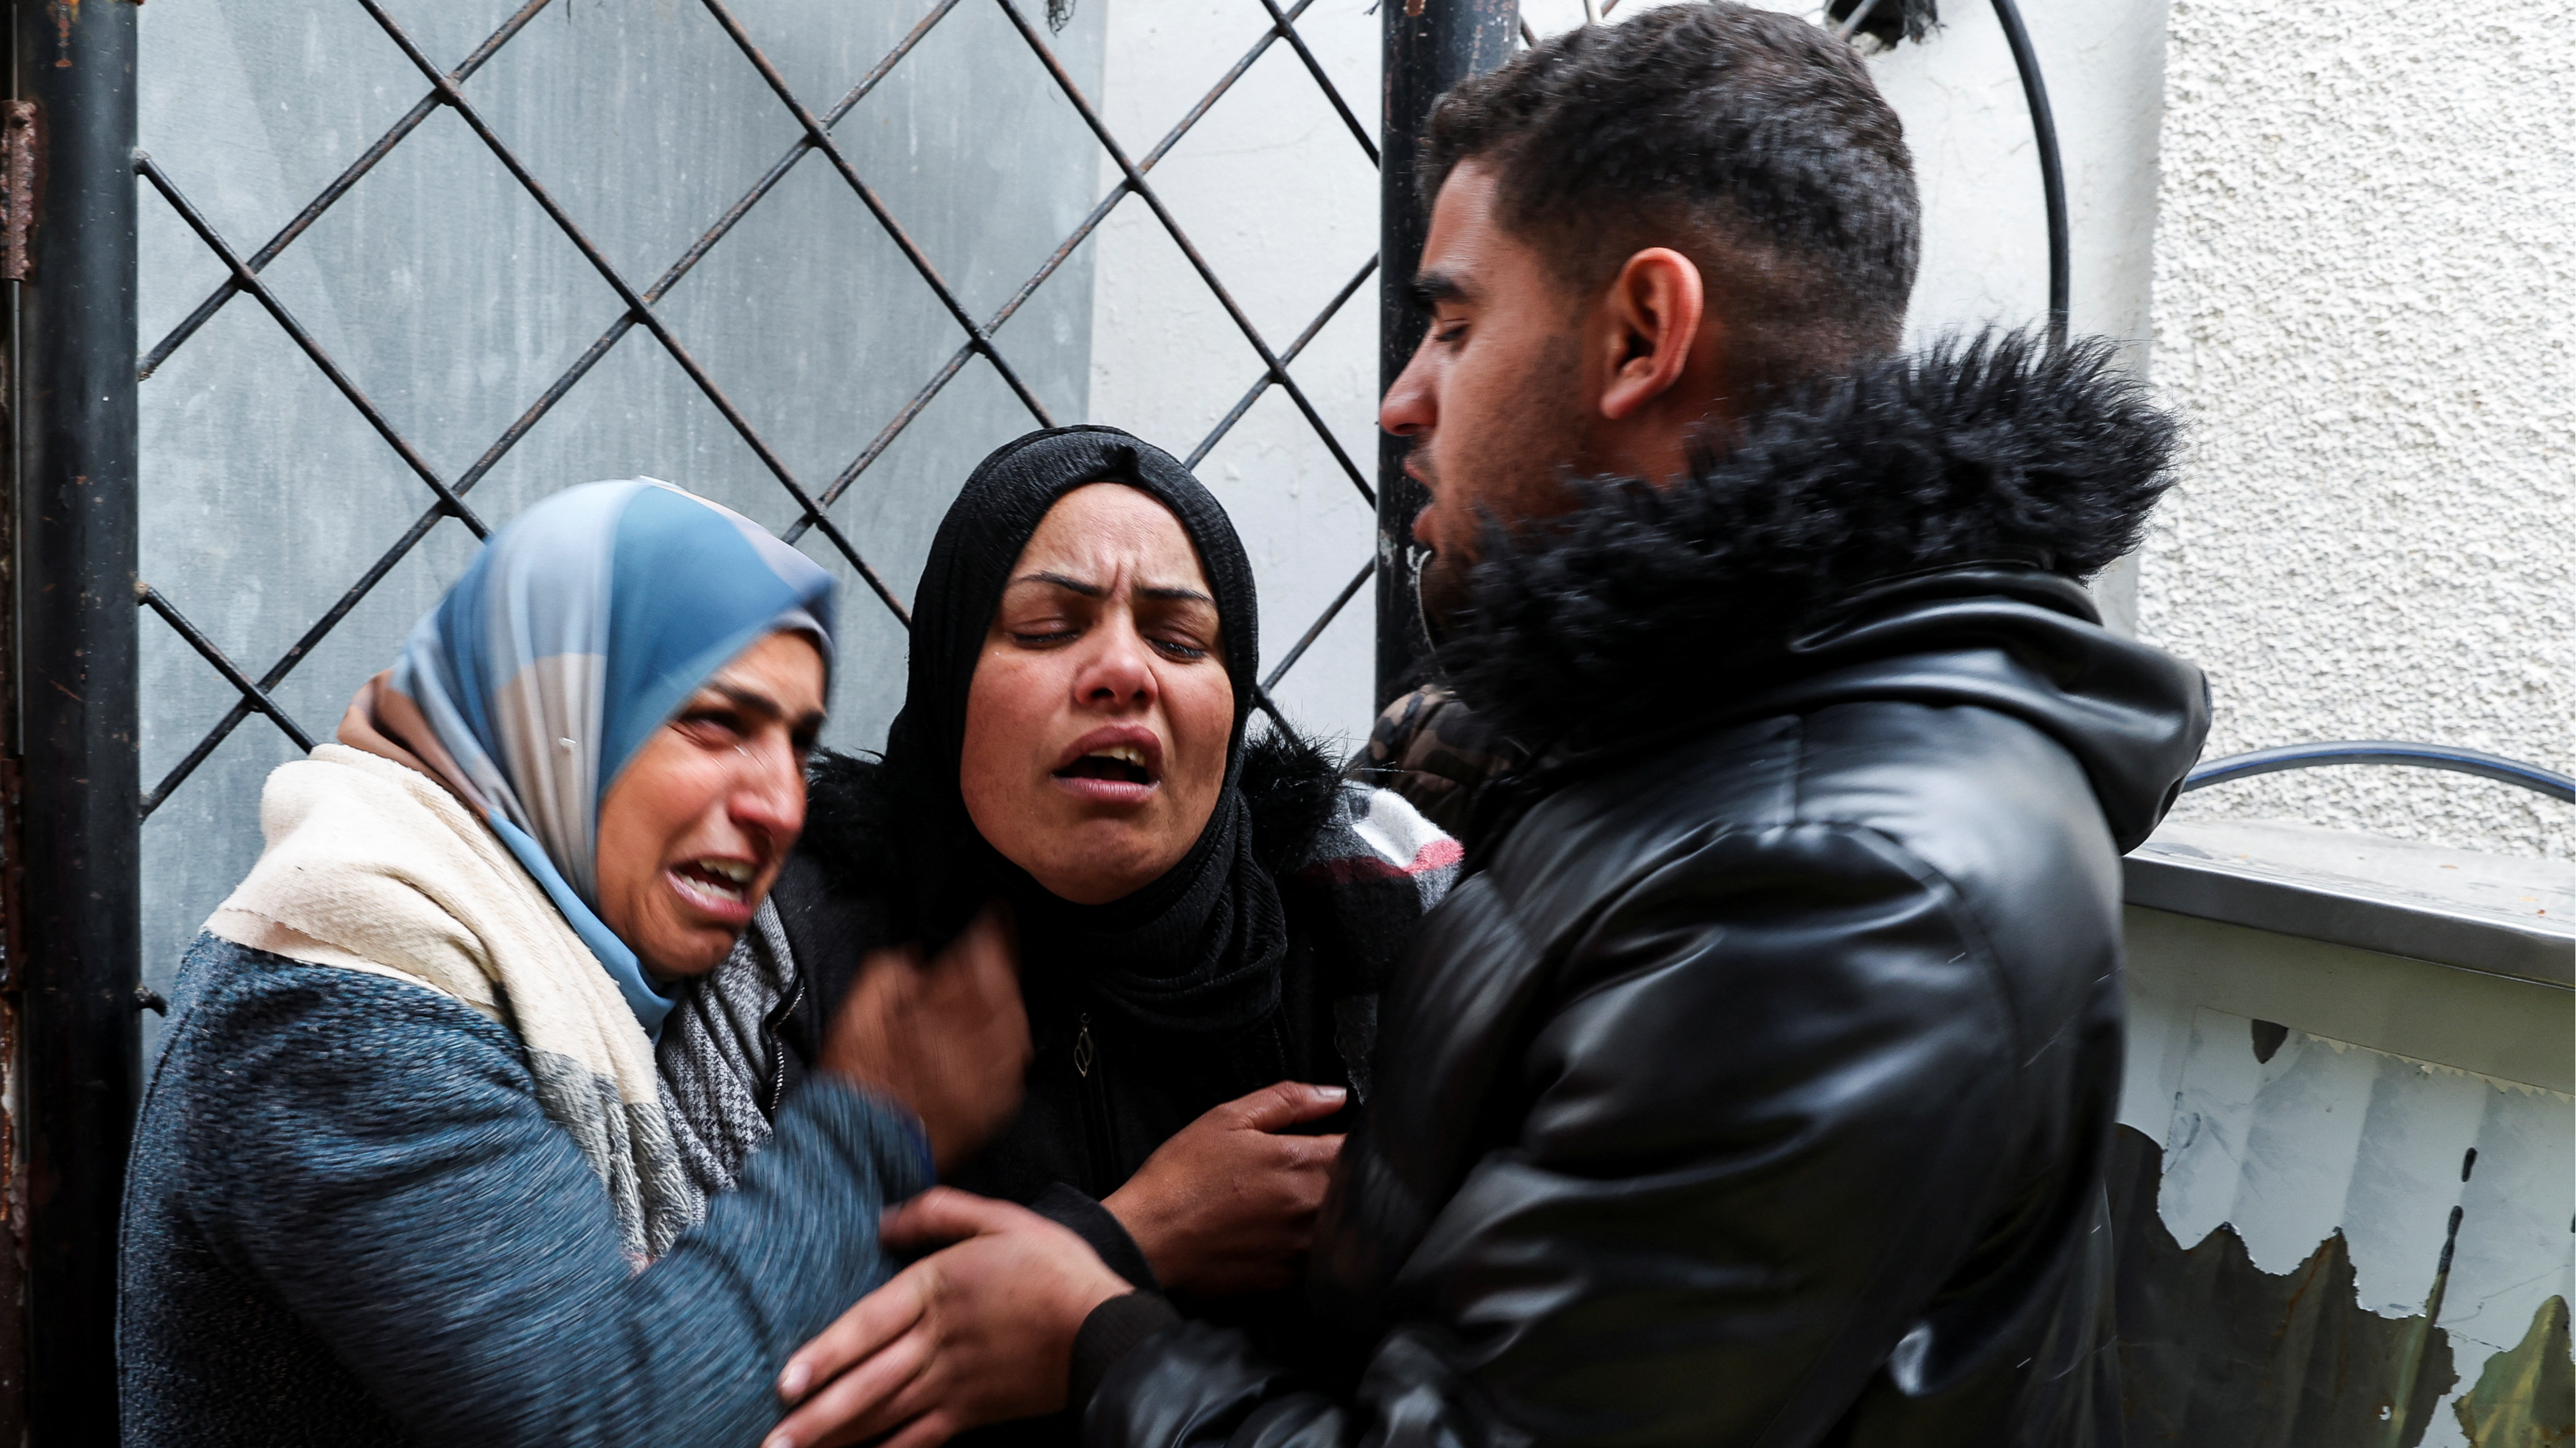 Mourners react following the death of Palestinians in Israeli strikes. /Ibraheem Abu Mustafa/Reuters